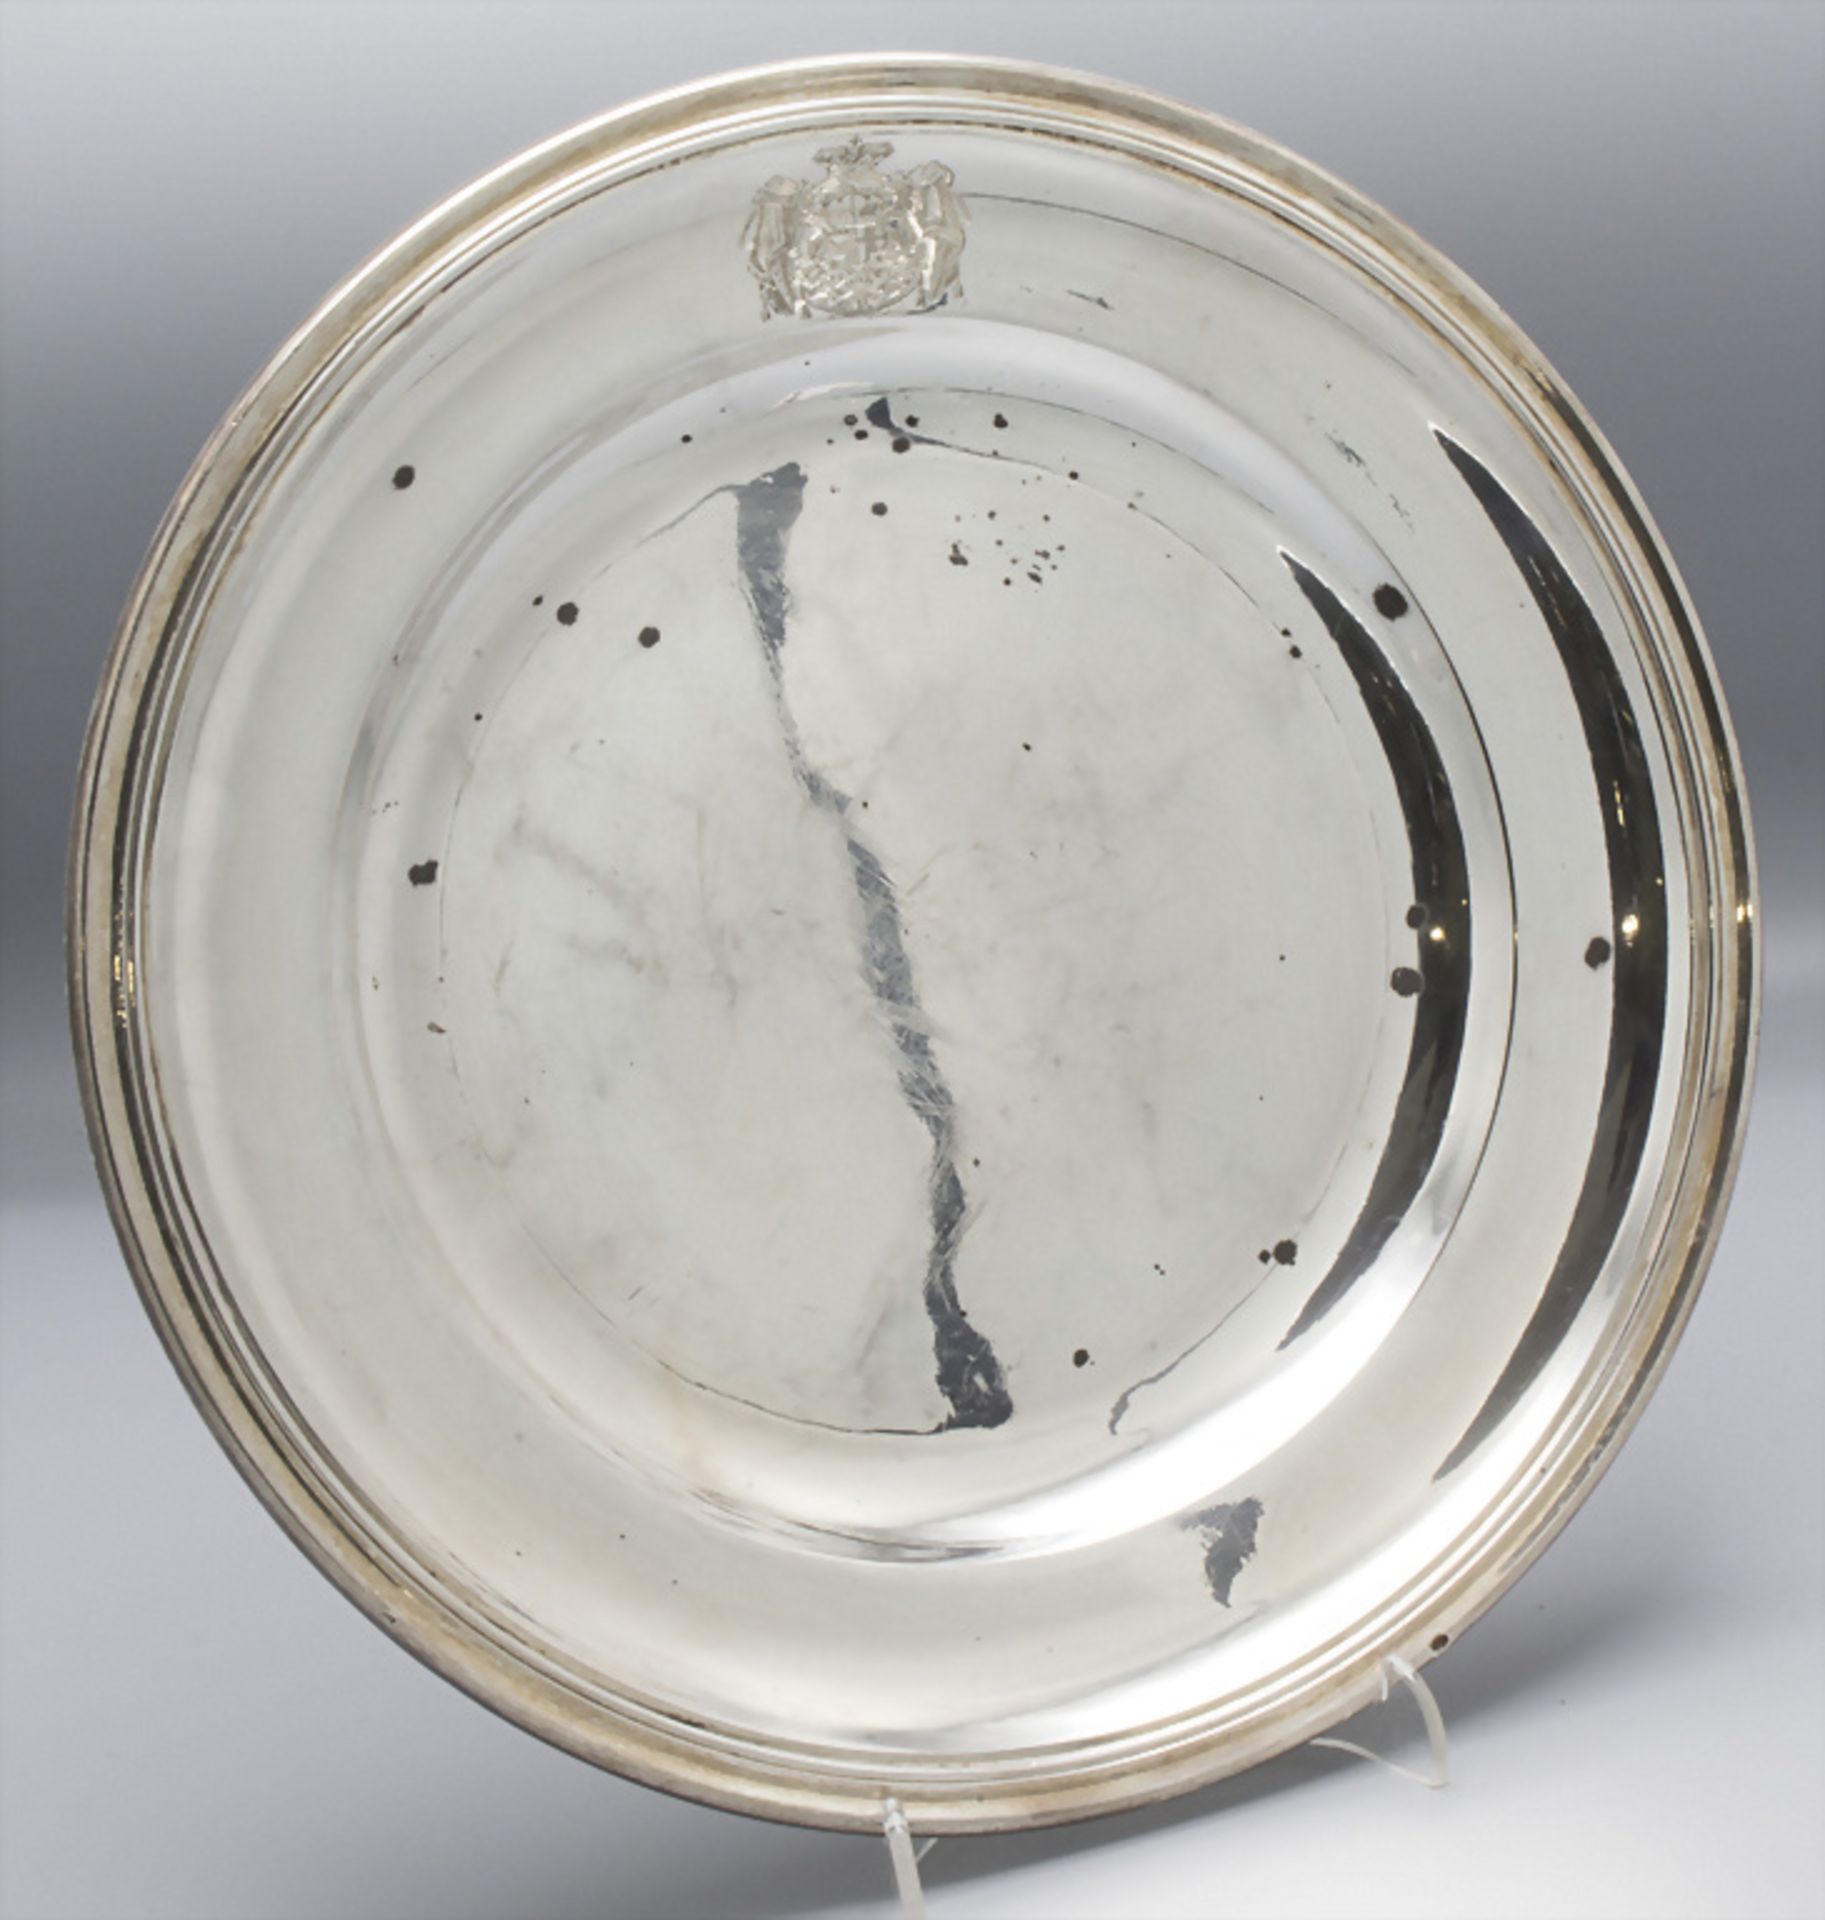 12 Silberteller / 12 assiettes en argent massif / A set of 12 silver plates, Odiot, Paris, um 1870 - Image 20 of 29